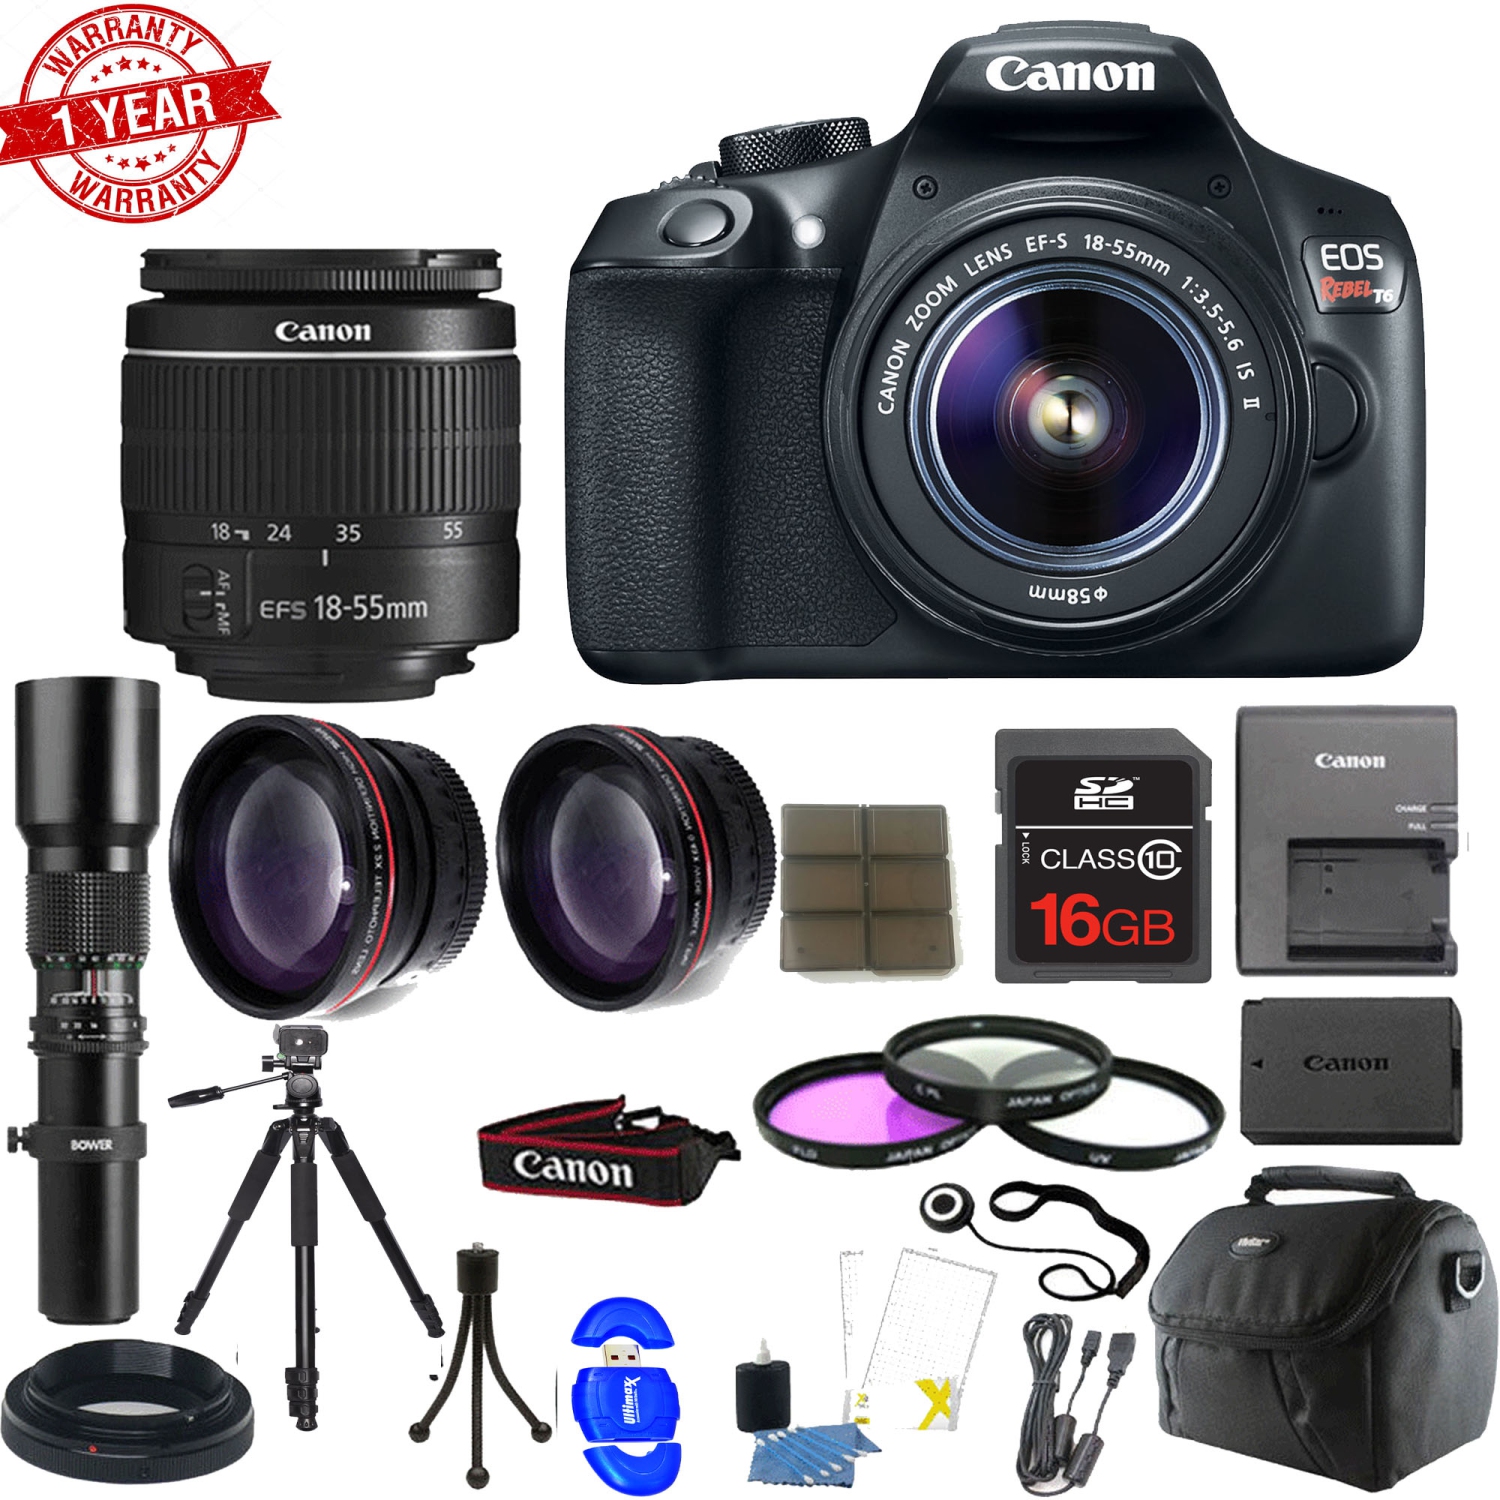 Canon EOS Rebel 1300D/T6 18MP DSLR Camera W/ 18-55mm Lens | 500mm Preset Lens Essential Bundle - US Version w/ Seller Warranty